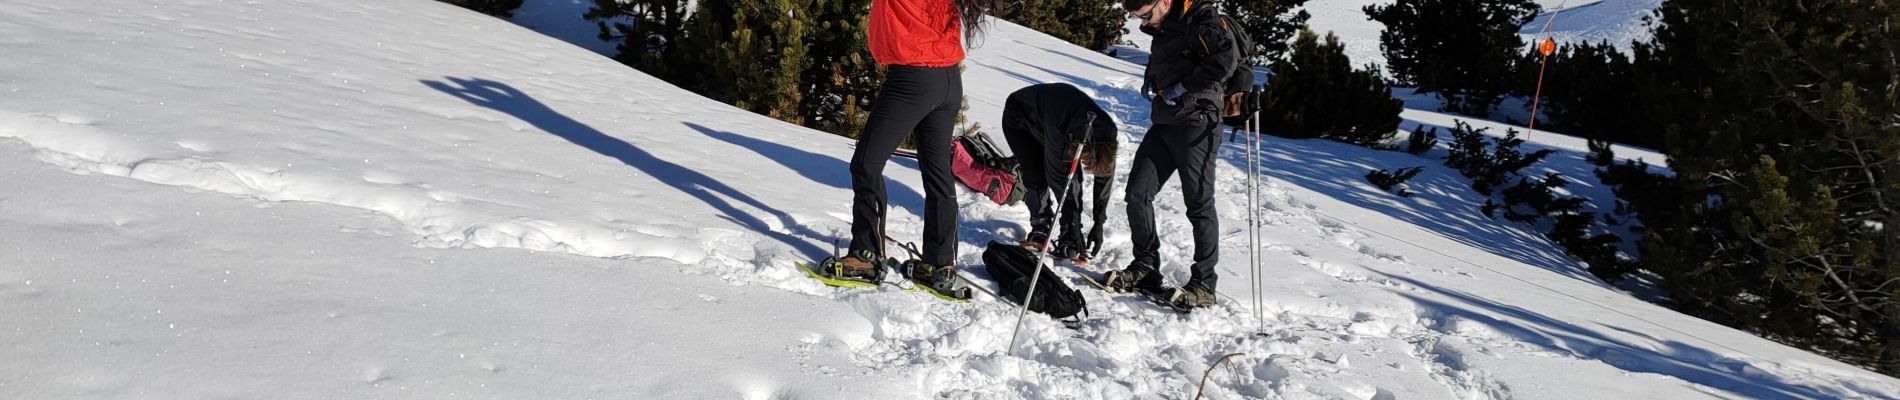 Tour Schneeschuhwandern Font-Romeu-Odeillo-Via - Autour du refuge de La Calme  - Photo